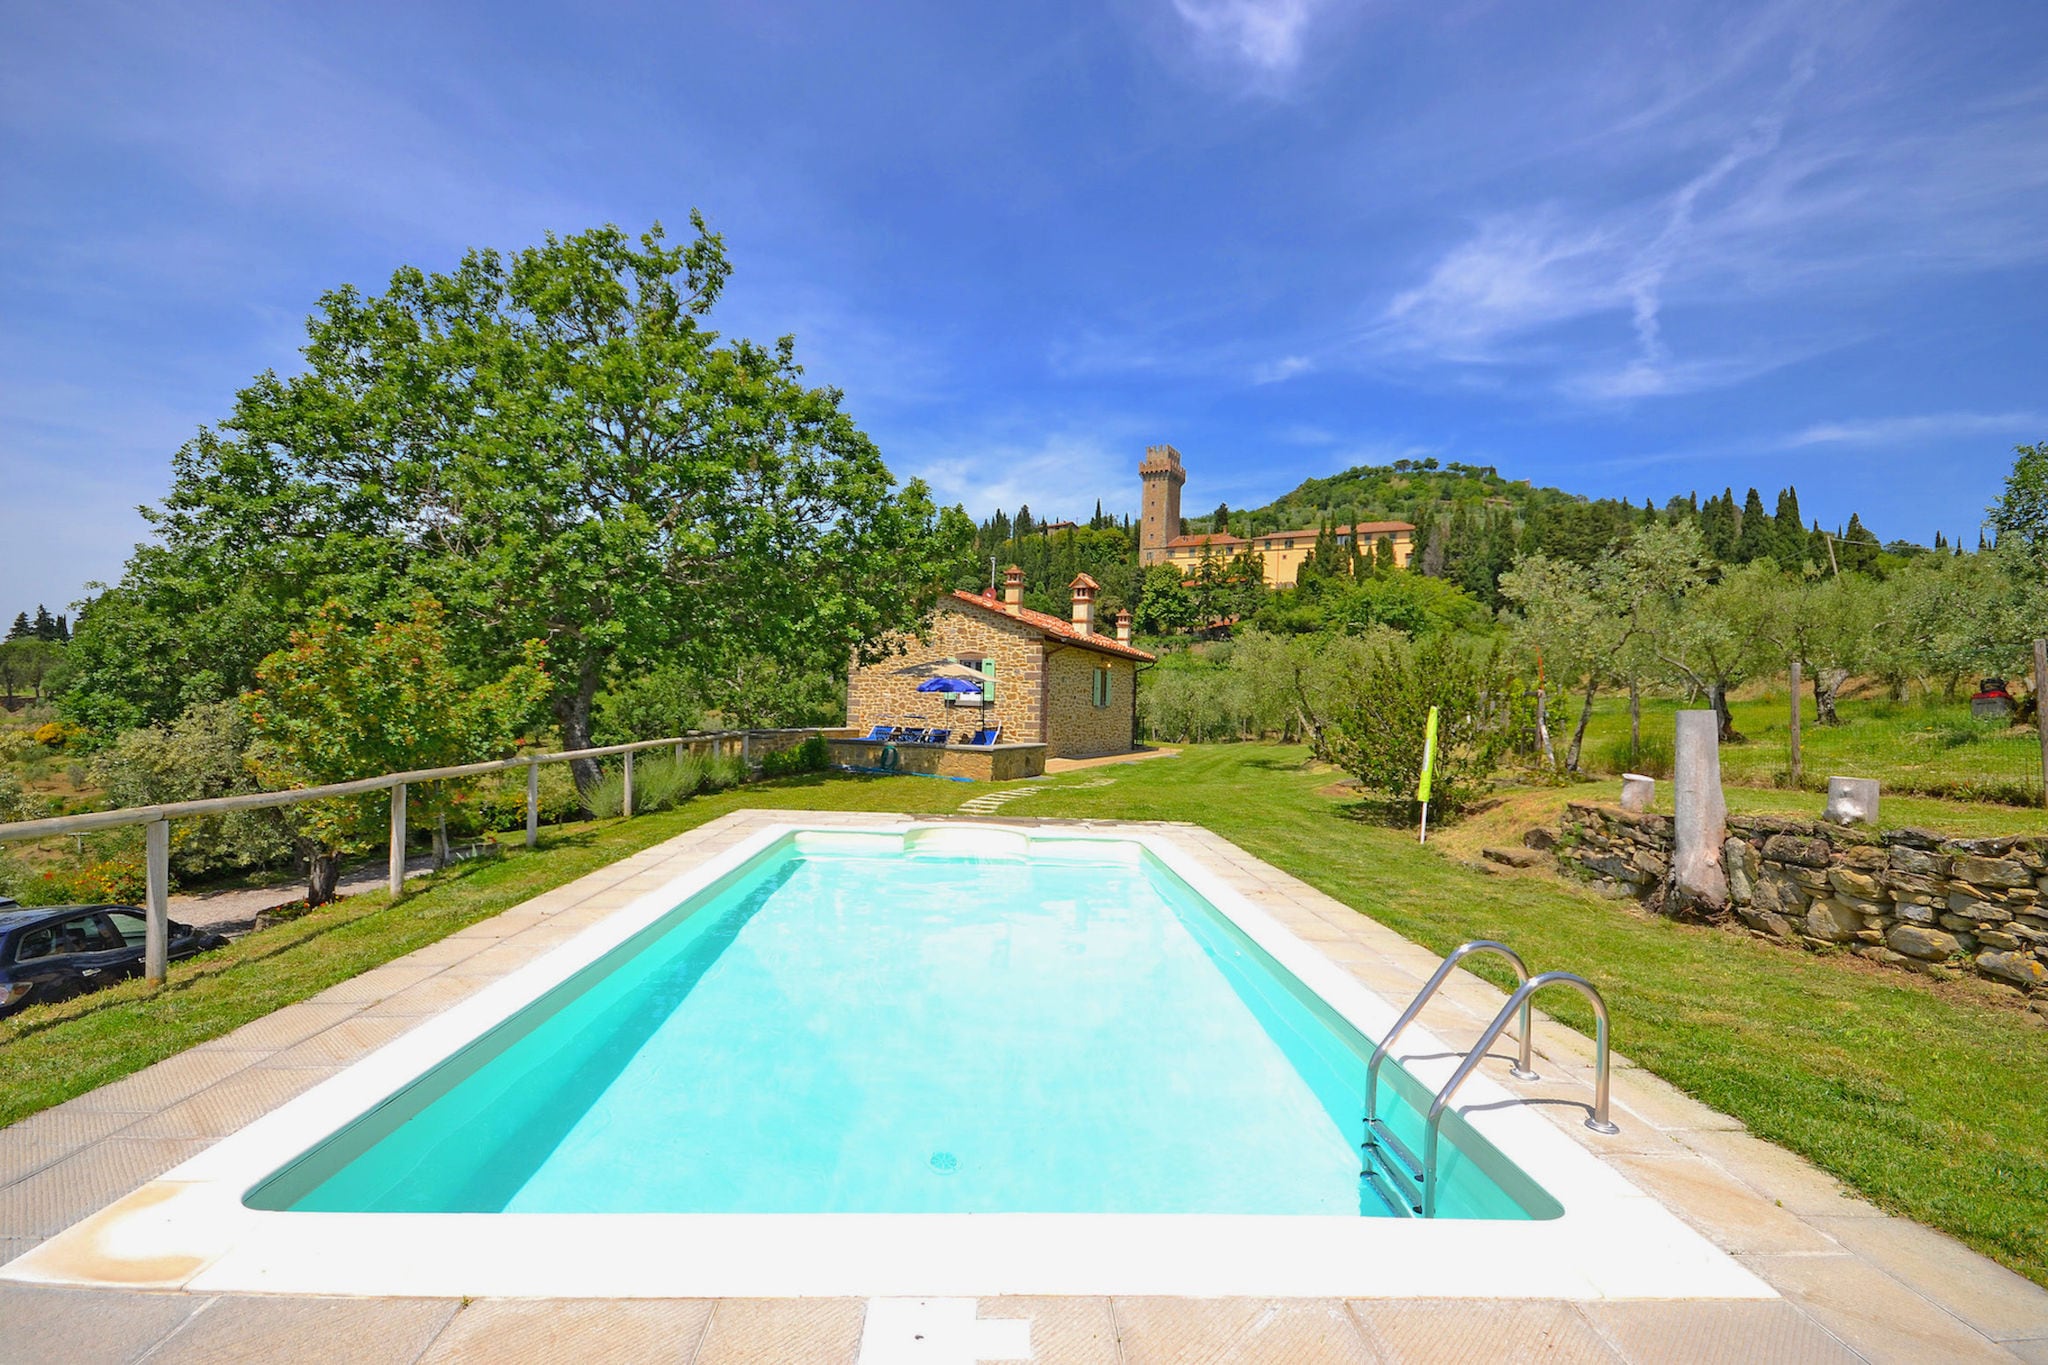 Luxurious Villa with Pool in Cortona Italy